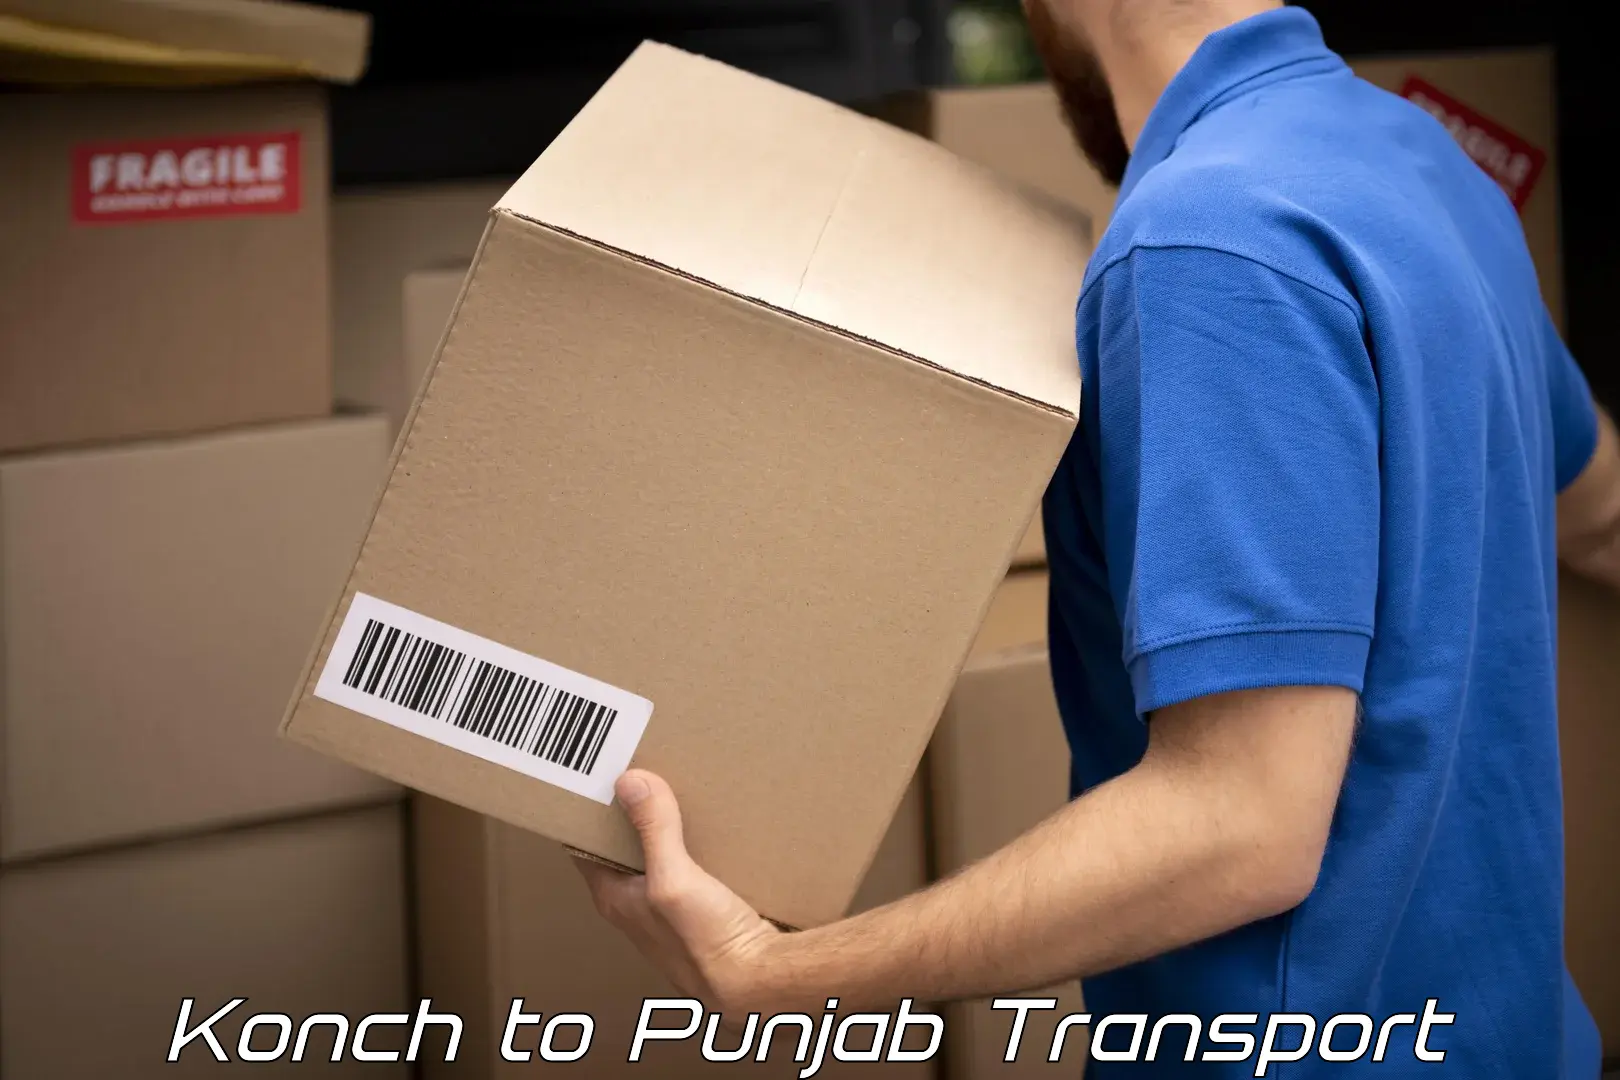 Online transport service Konch to Punjab